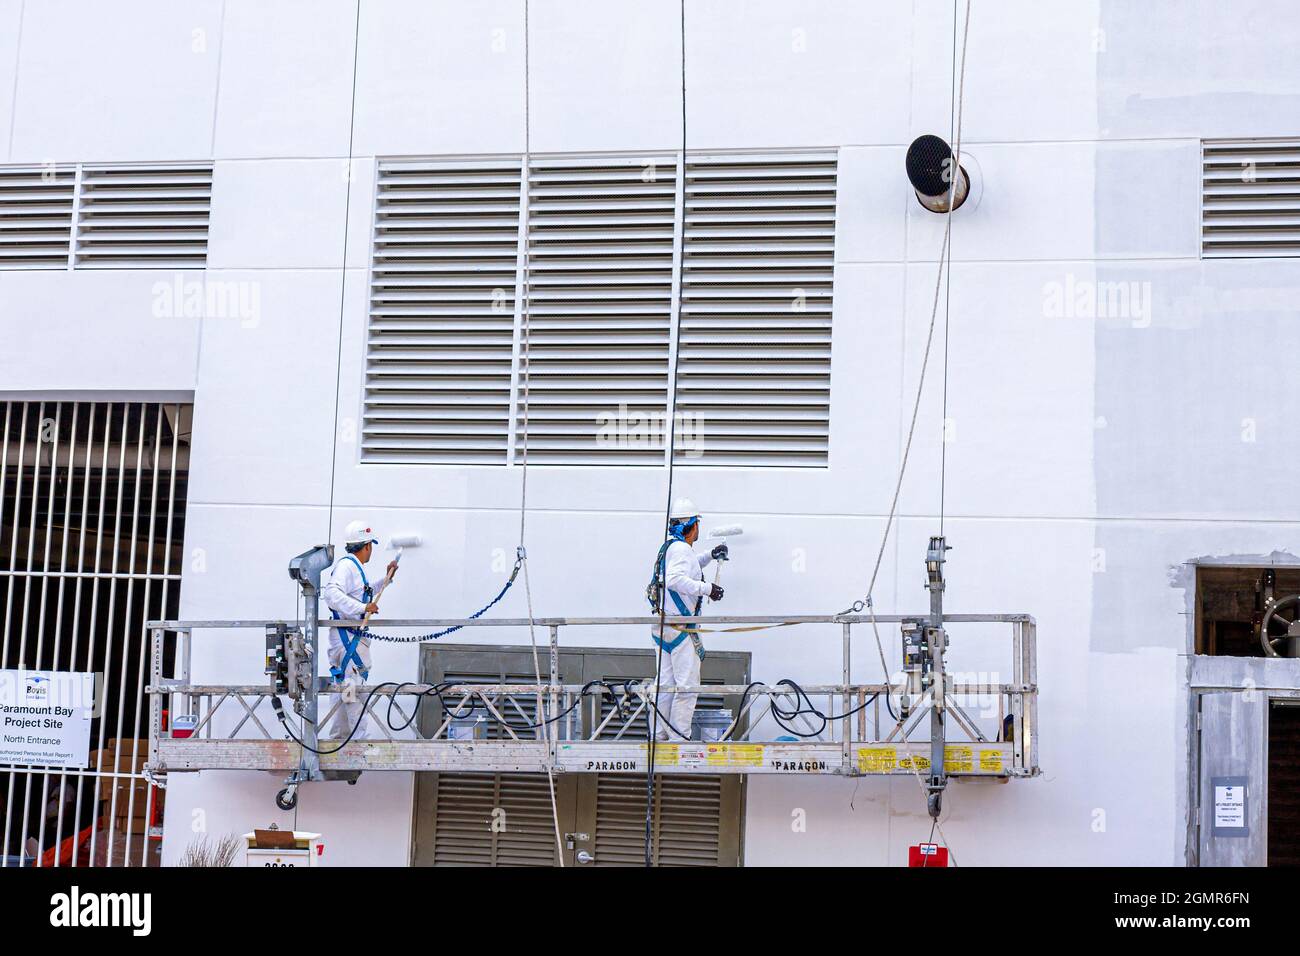 Miami Florida, Paramount Bay, unter Neubaustelle Gebäude Männer Maler Malerei Arbeiter, Schaukel Bühne erhöht Arbeitsplattform Hängelinien Stockfoto